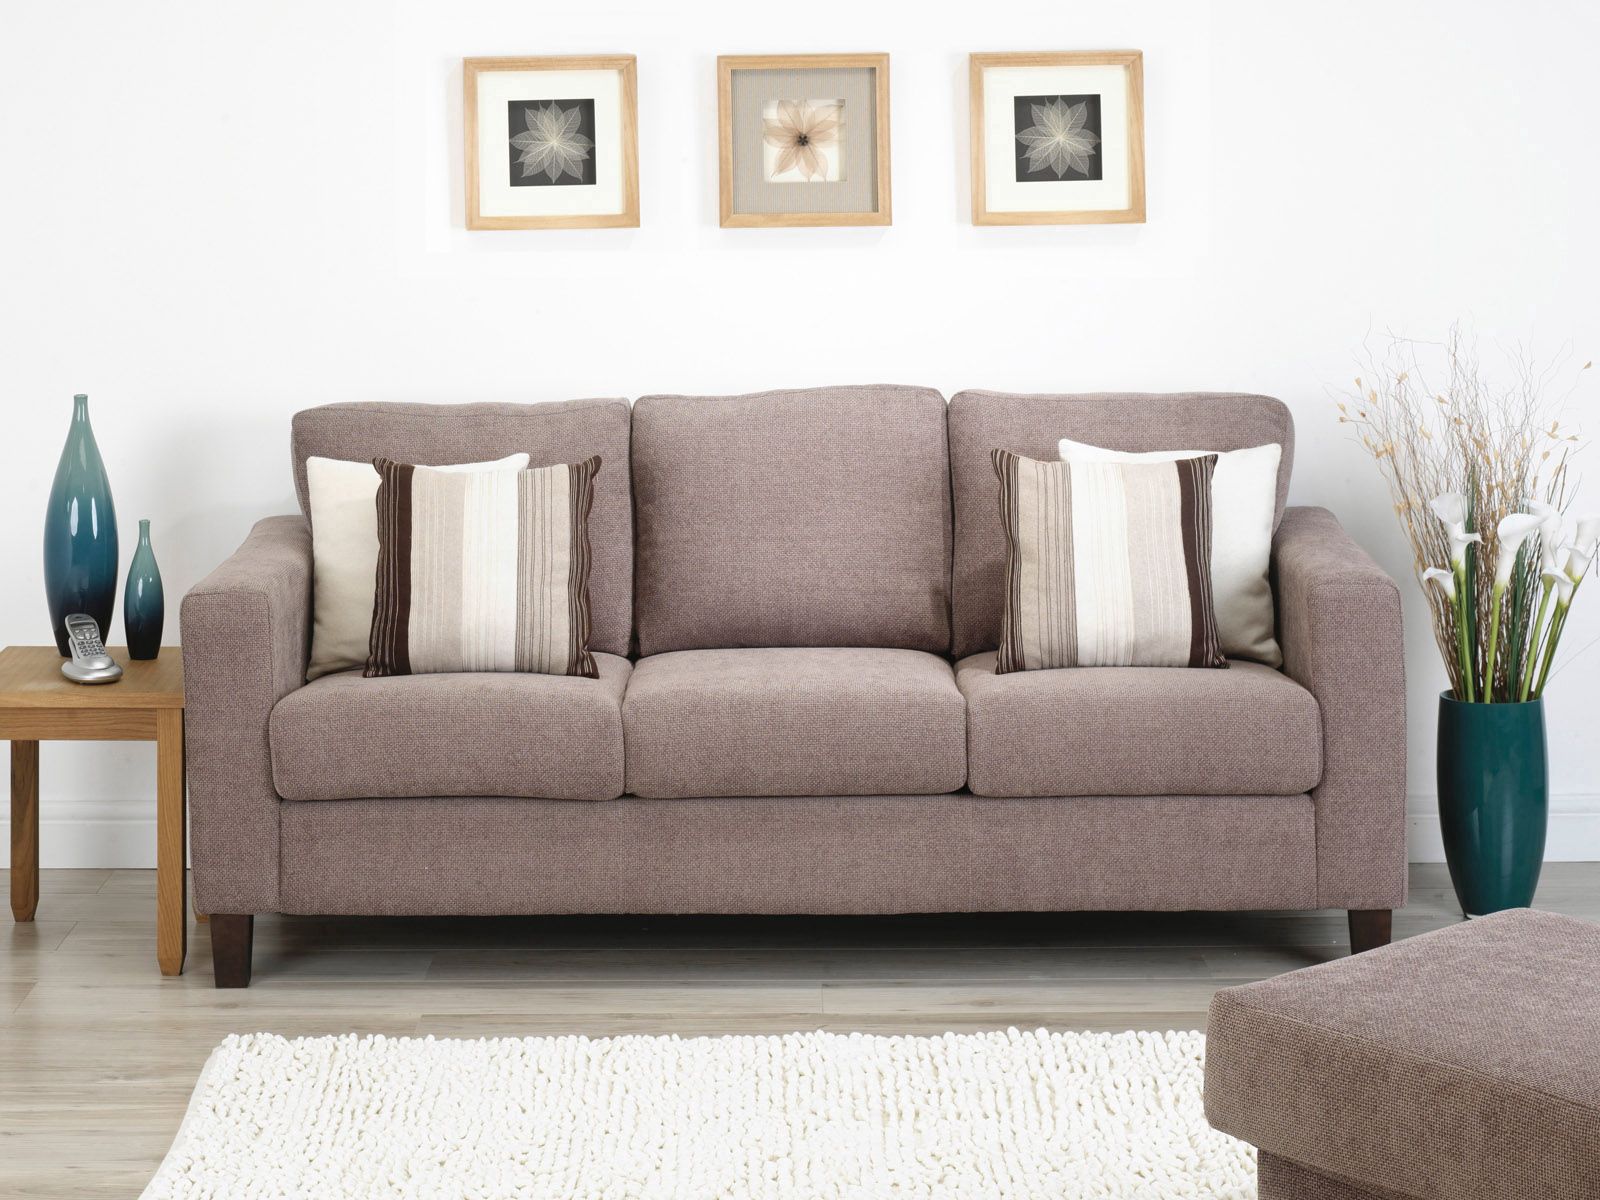 furniture, pillows, miscellanea, miscellaneous, sofa, cushions